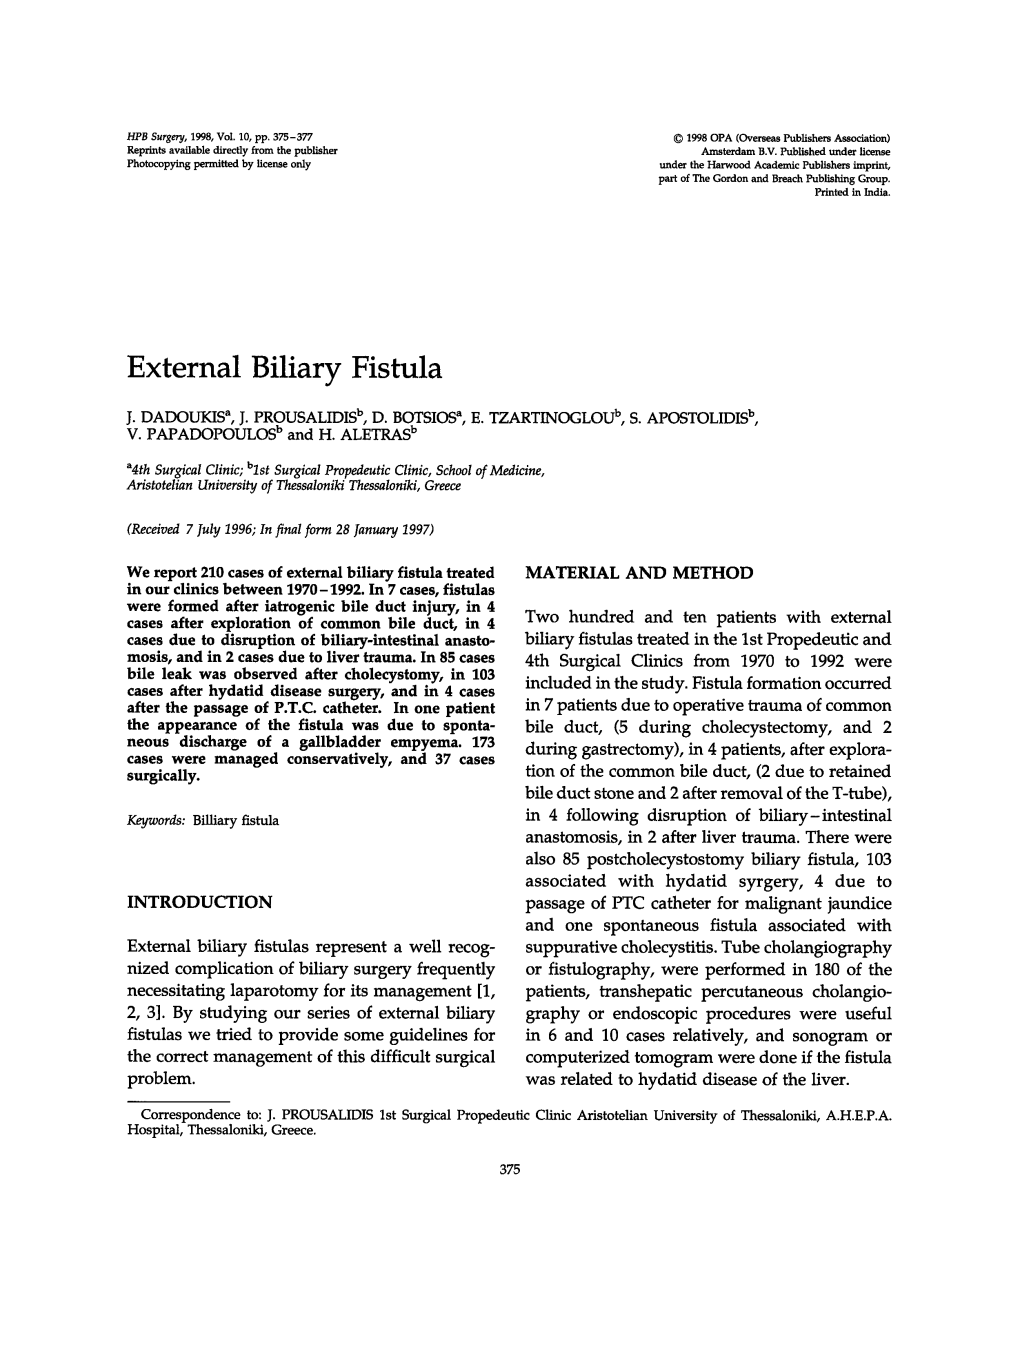 External Biliary Fistula